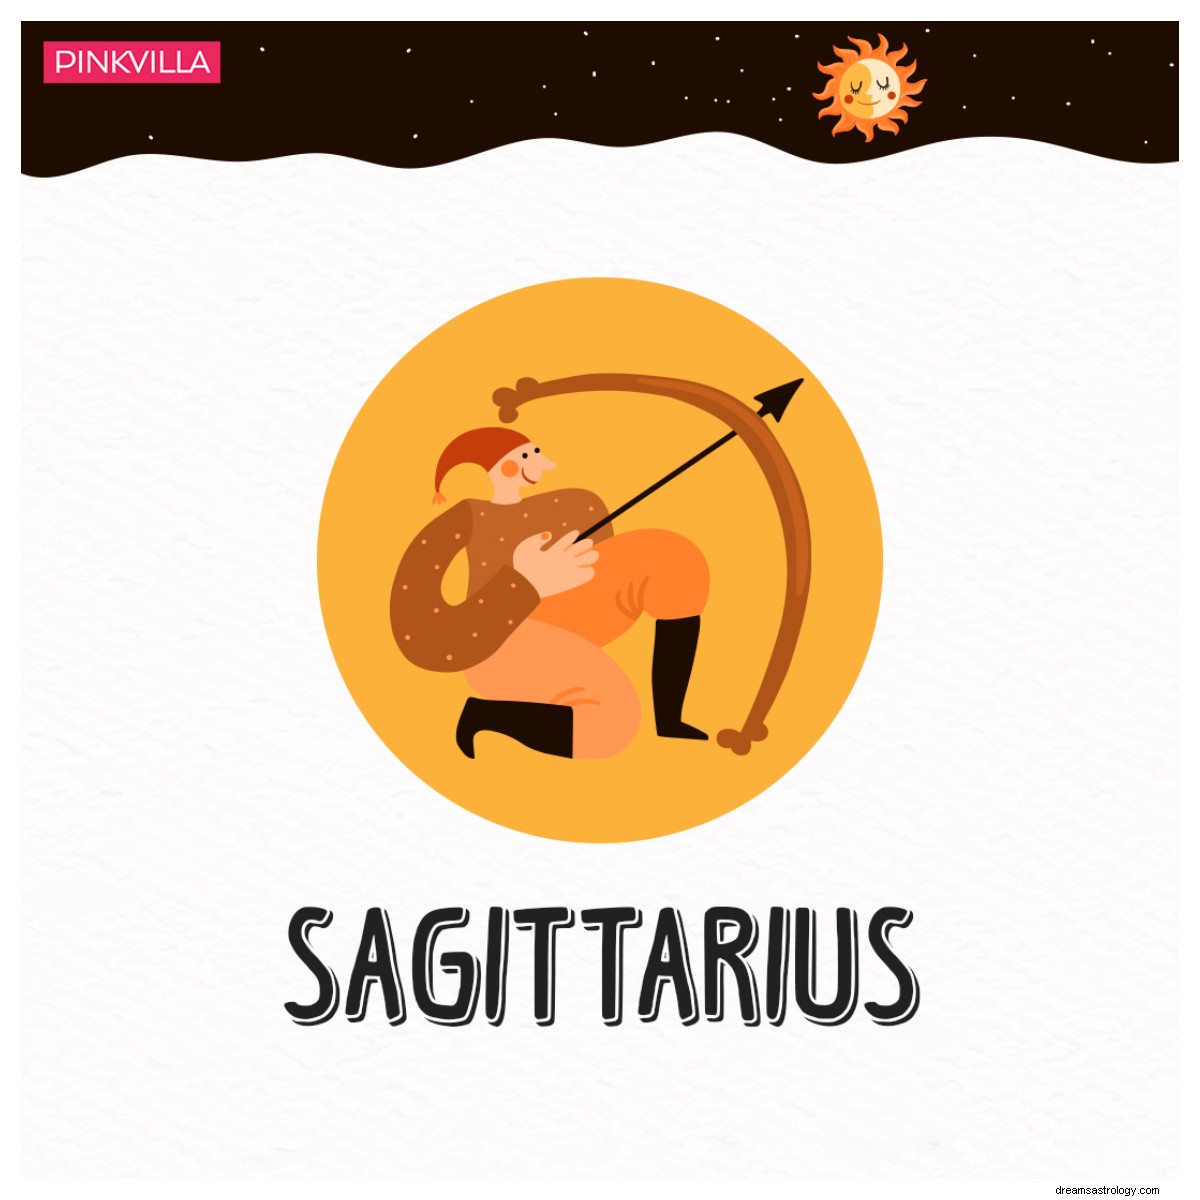 Astro talk:3 signos del zodiaco que son volubles 